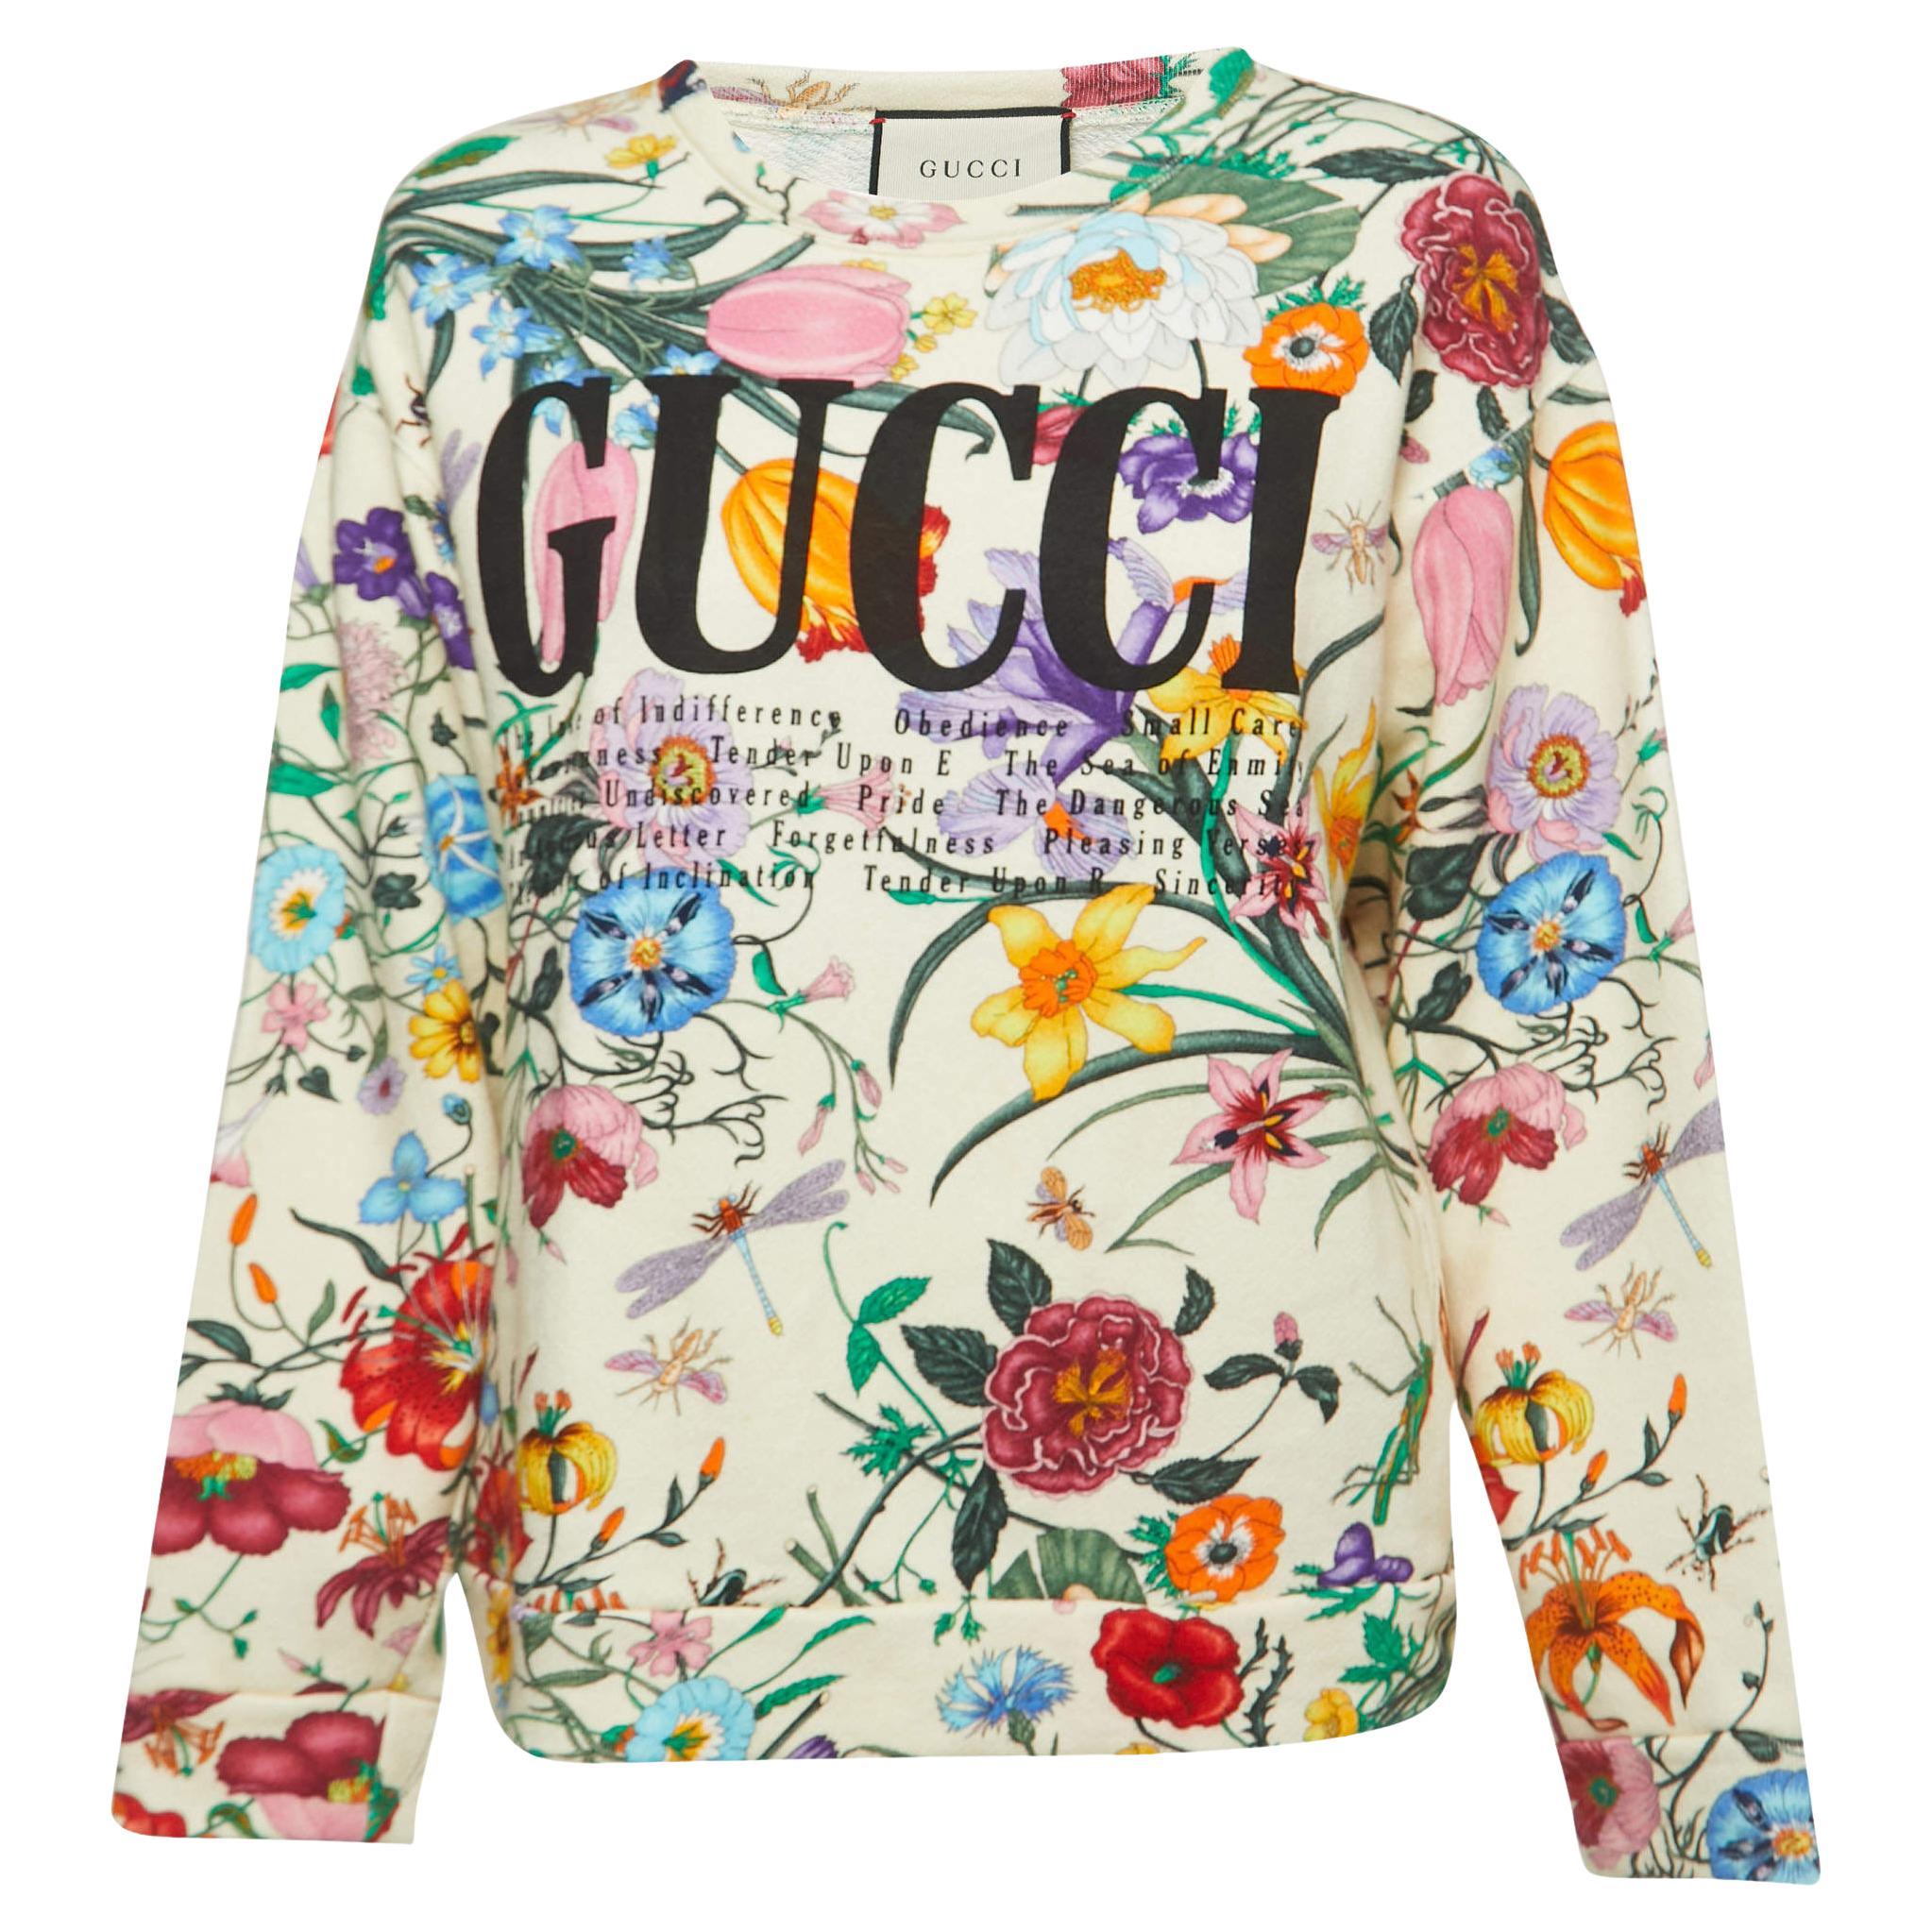 Do Gucci hoodies run big?